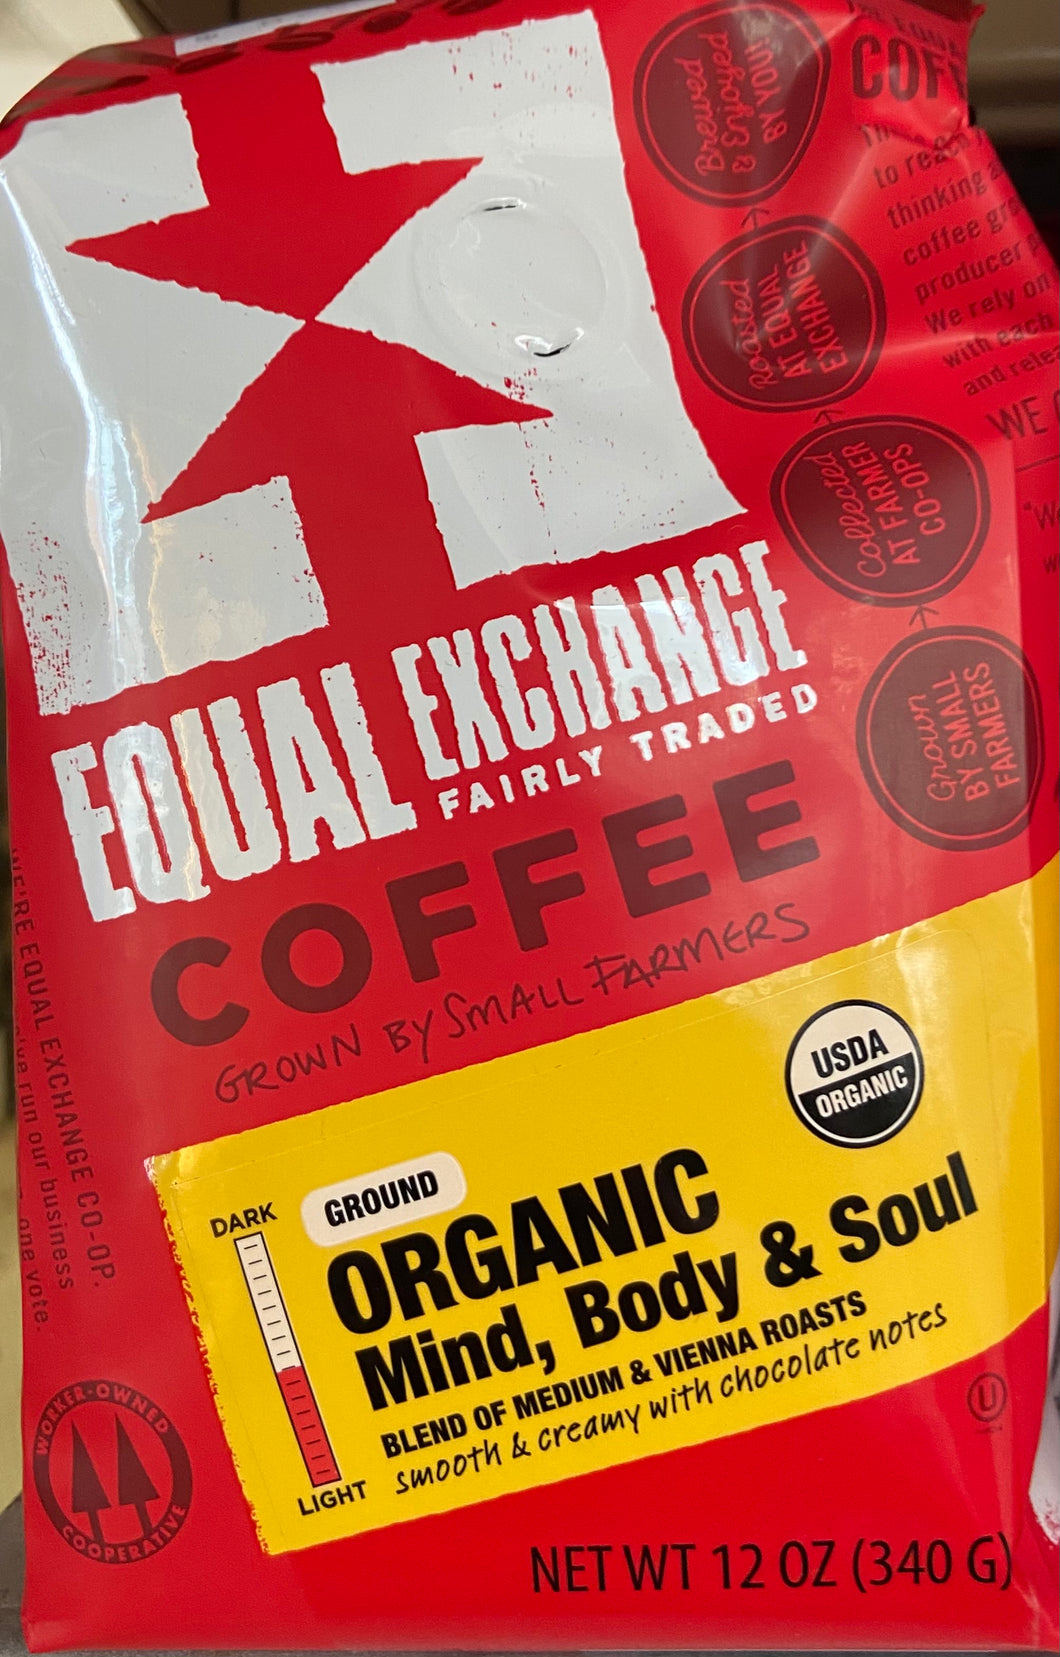 Coffee, Organic Mind, Body & Soul, Ground, Equal Exchange